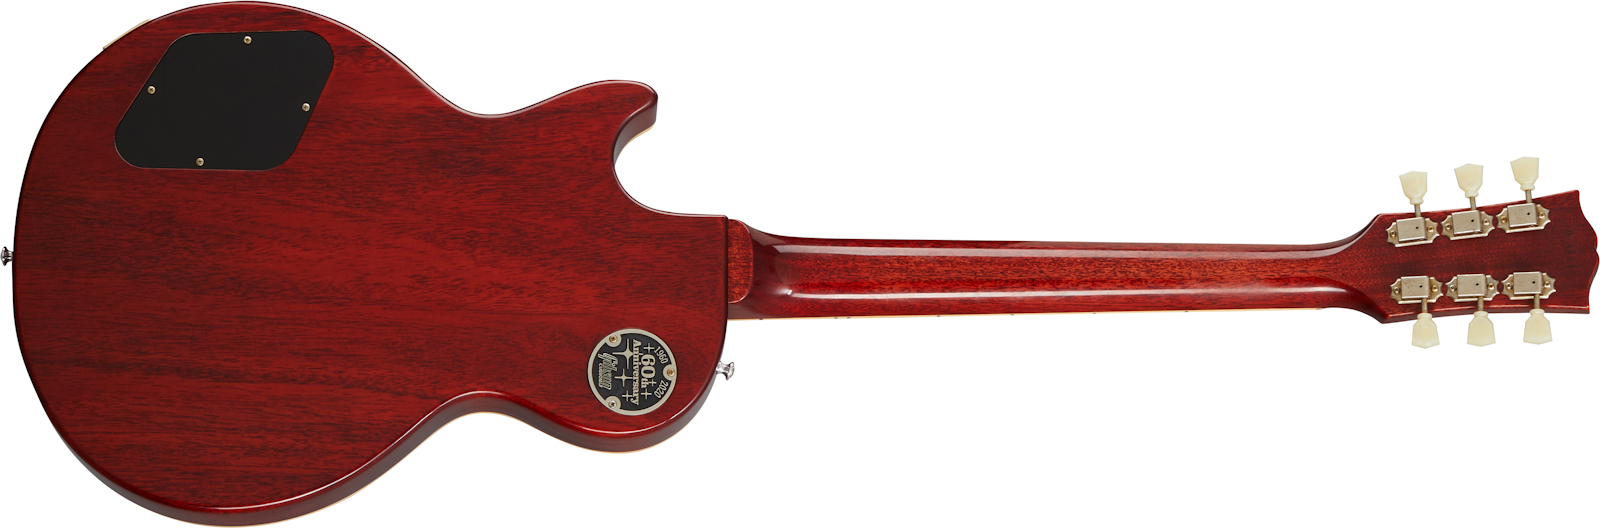 Gibson Custom Shop Les Paul Standard 1960 V1 60th Anniversary 2h Ht Rw - Vos Deep Cherry Sunburst - Enkel gesneden elektrische gitaar - Variation 1